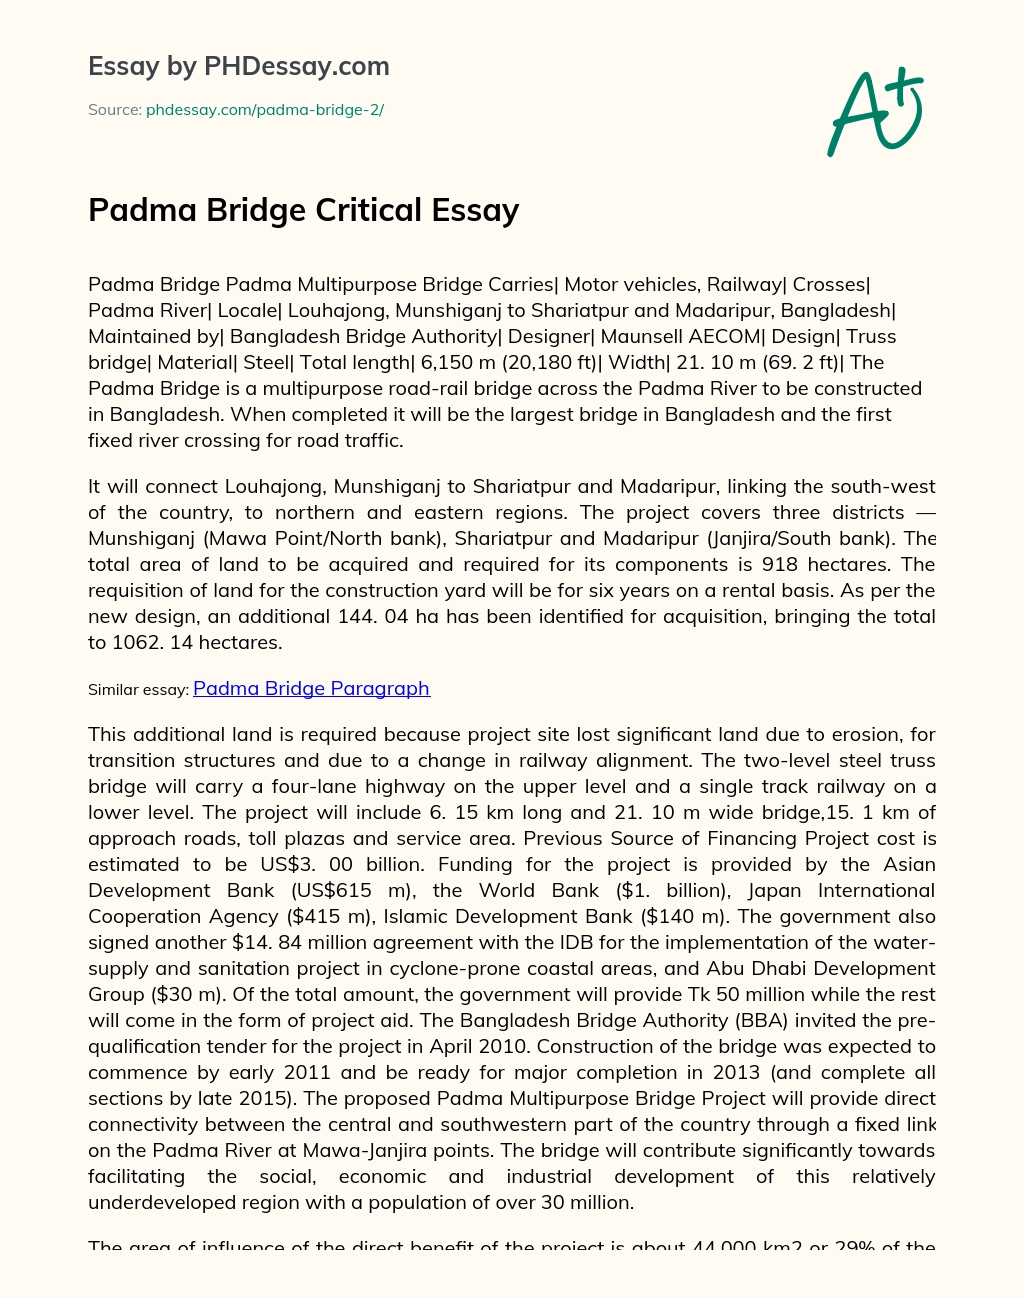 Padma Bridge Critical Essay essay